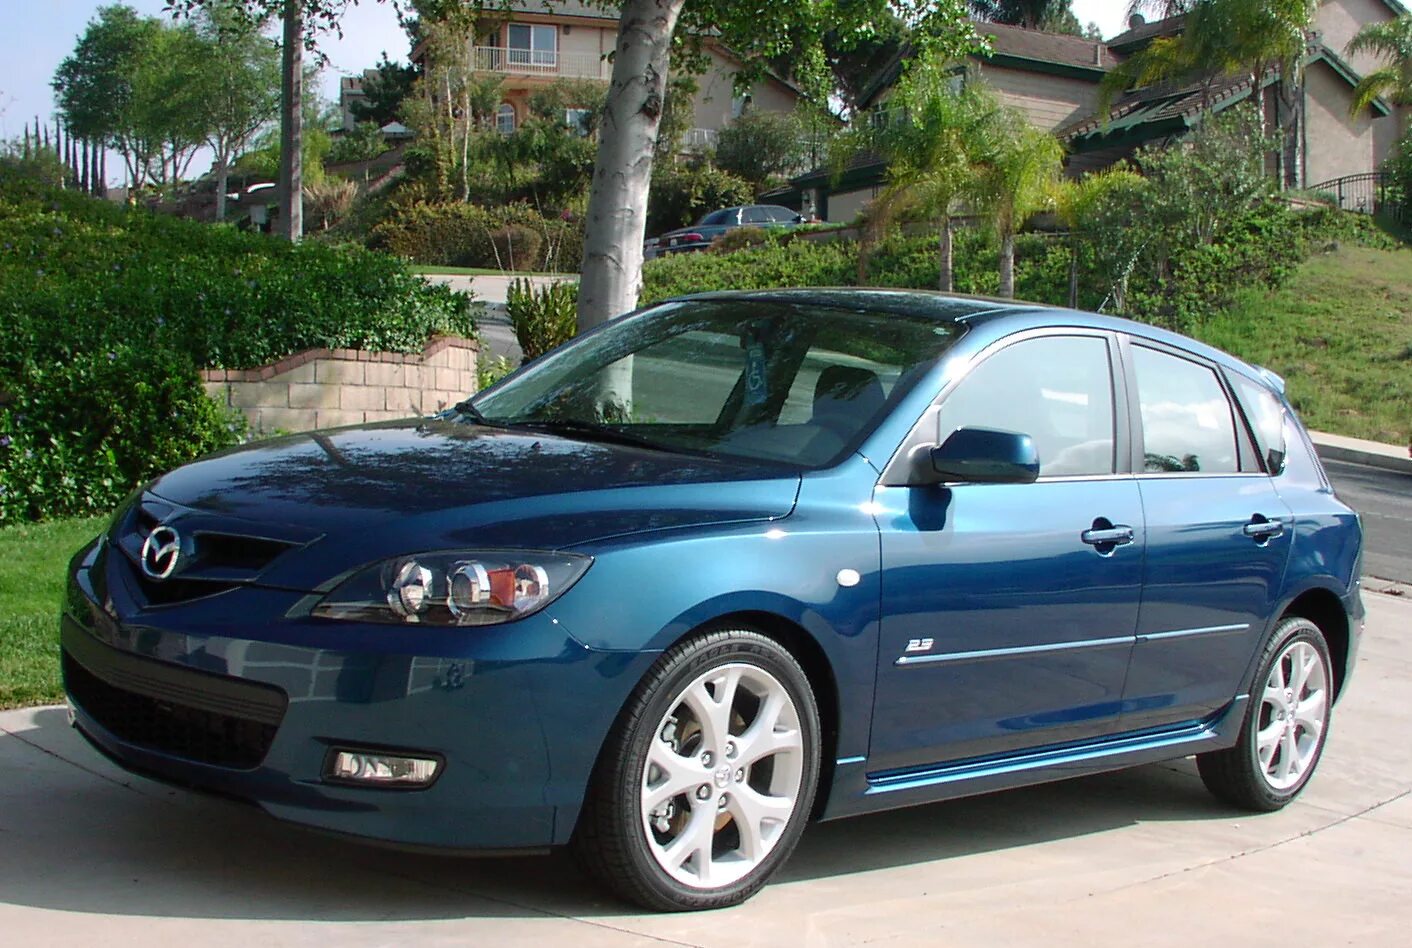 Mazda 3 2007. Mazda 3 Hatchback 2007. Мазда 3 2007 хэтчбек 1.6. Мазда 3 седан 2007. Мазда 3 2007г